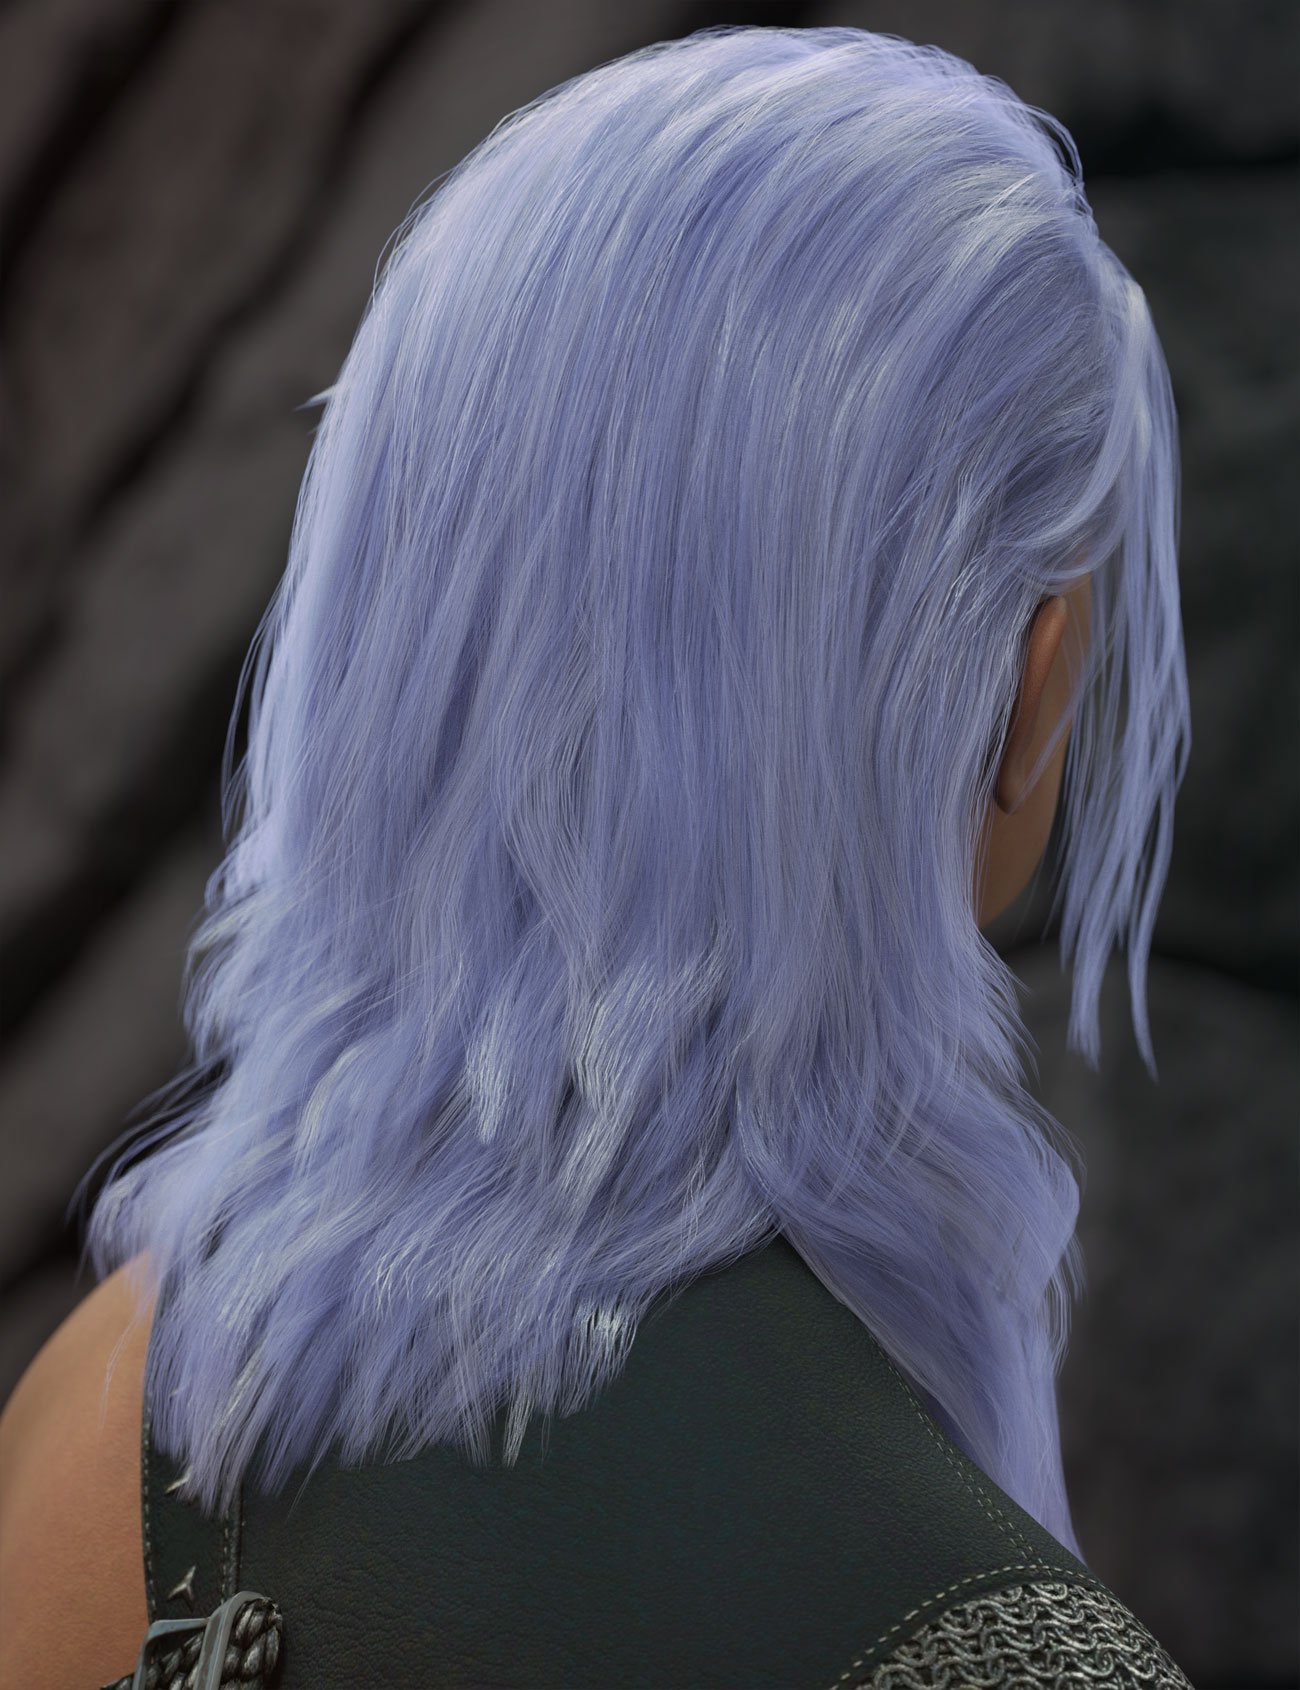 Ashendun Hair for Genesis 9 by: AprilYSH, 3D Models by Daz 3D